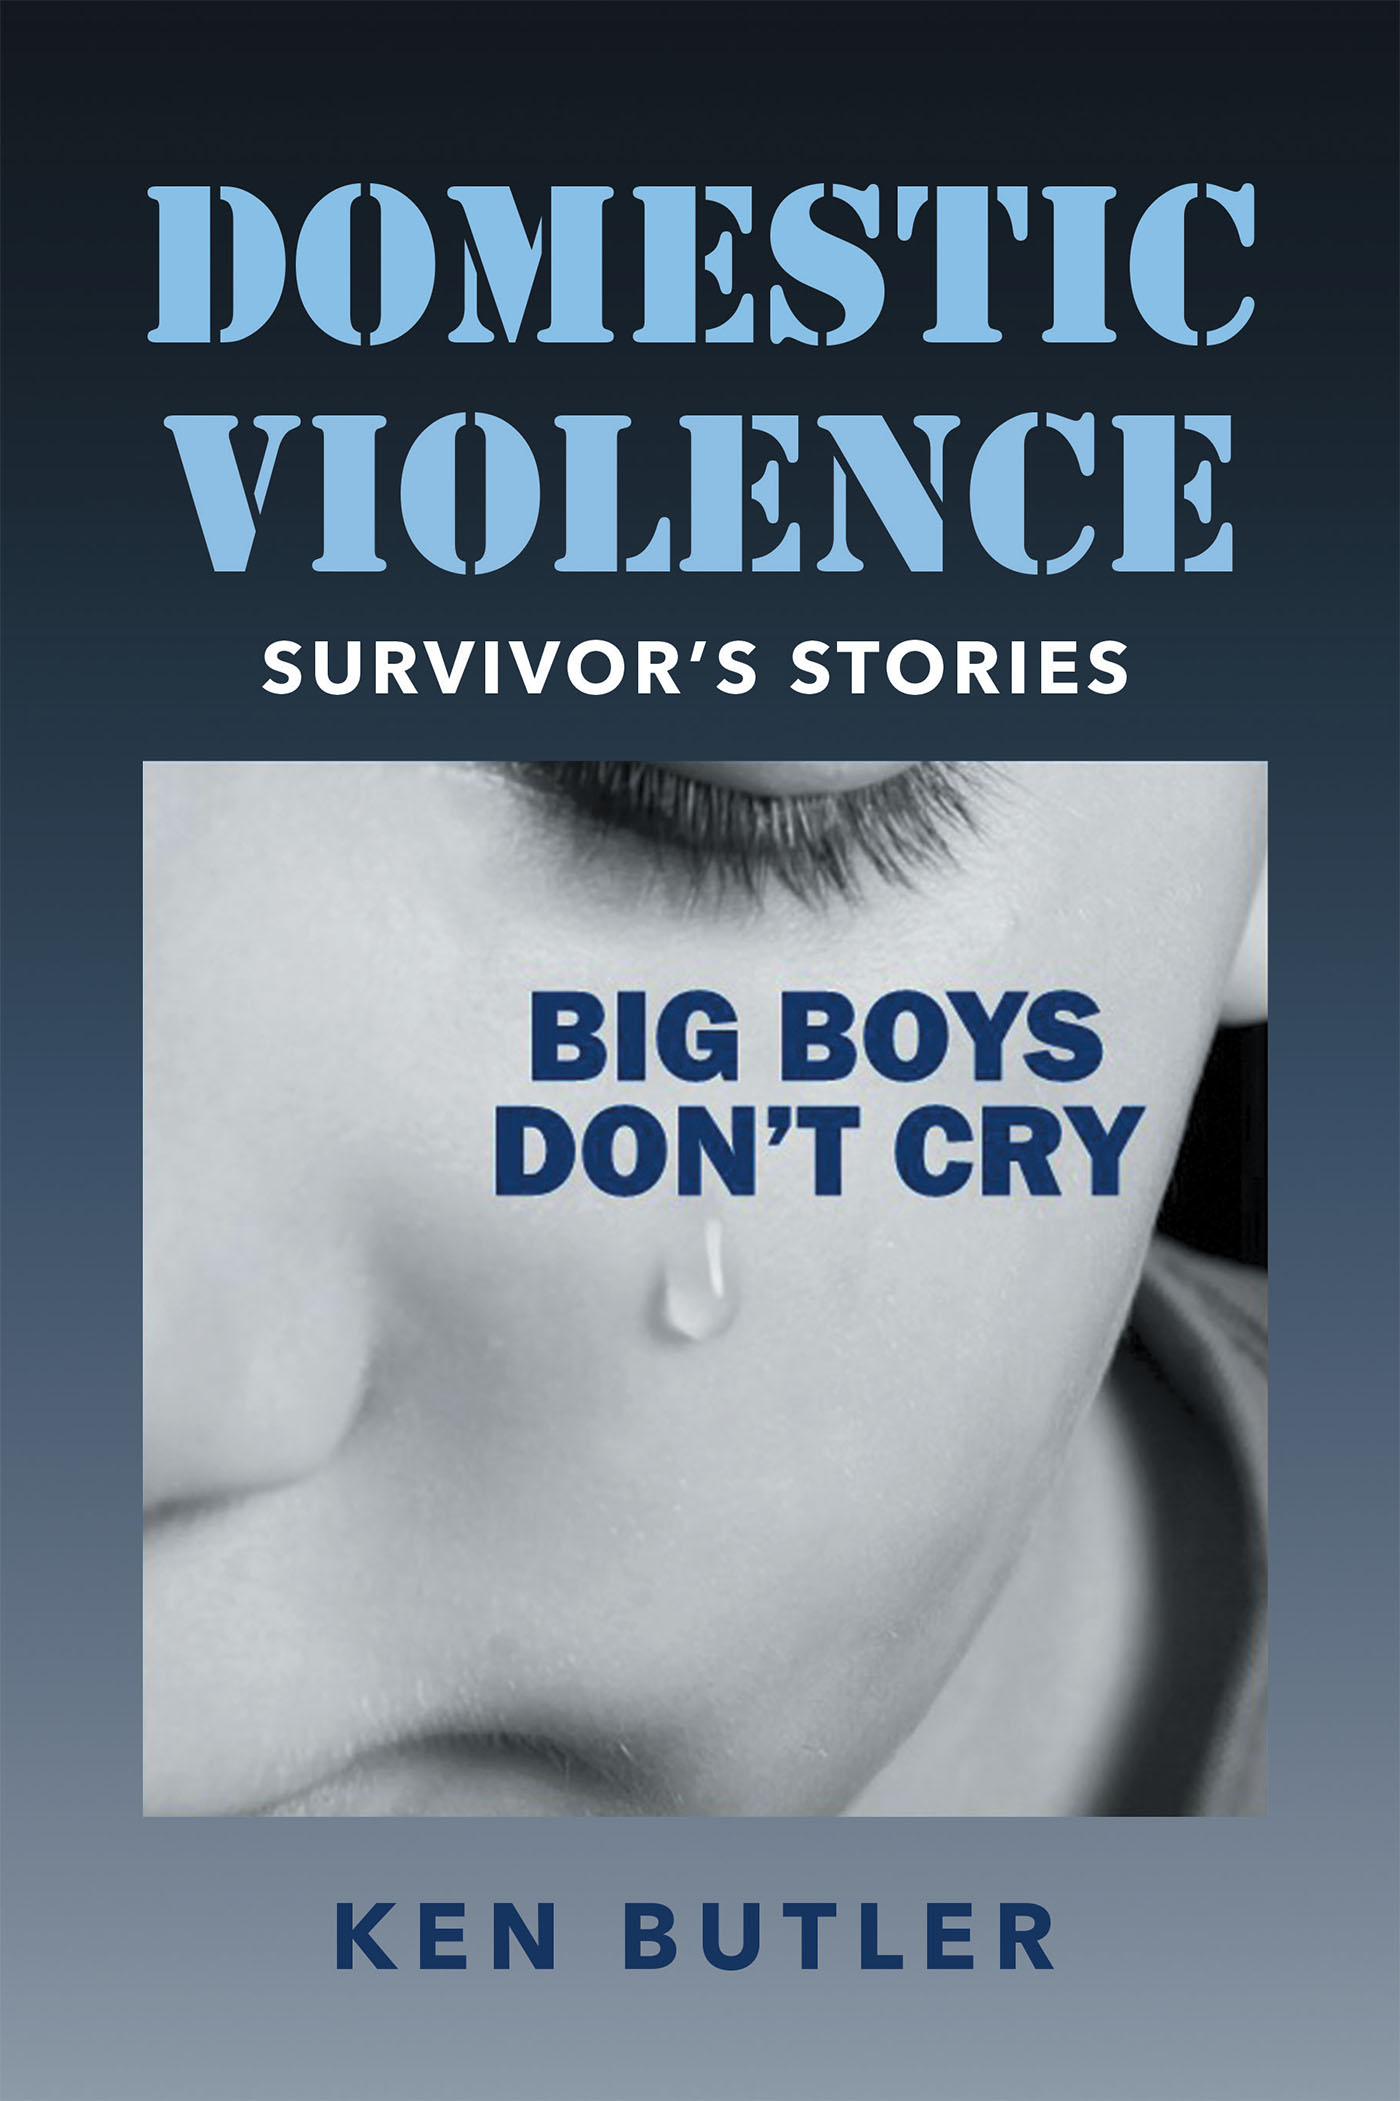 Ken Butler’s new book “Domestic Violence Survivor's Stories Big Boys